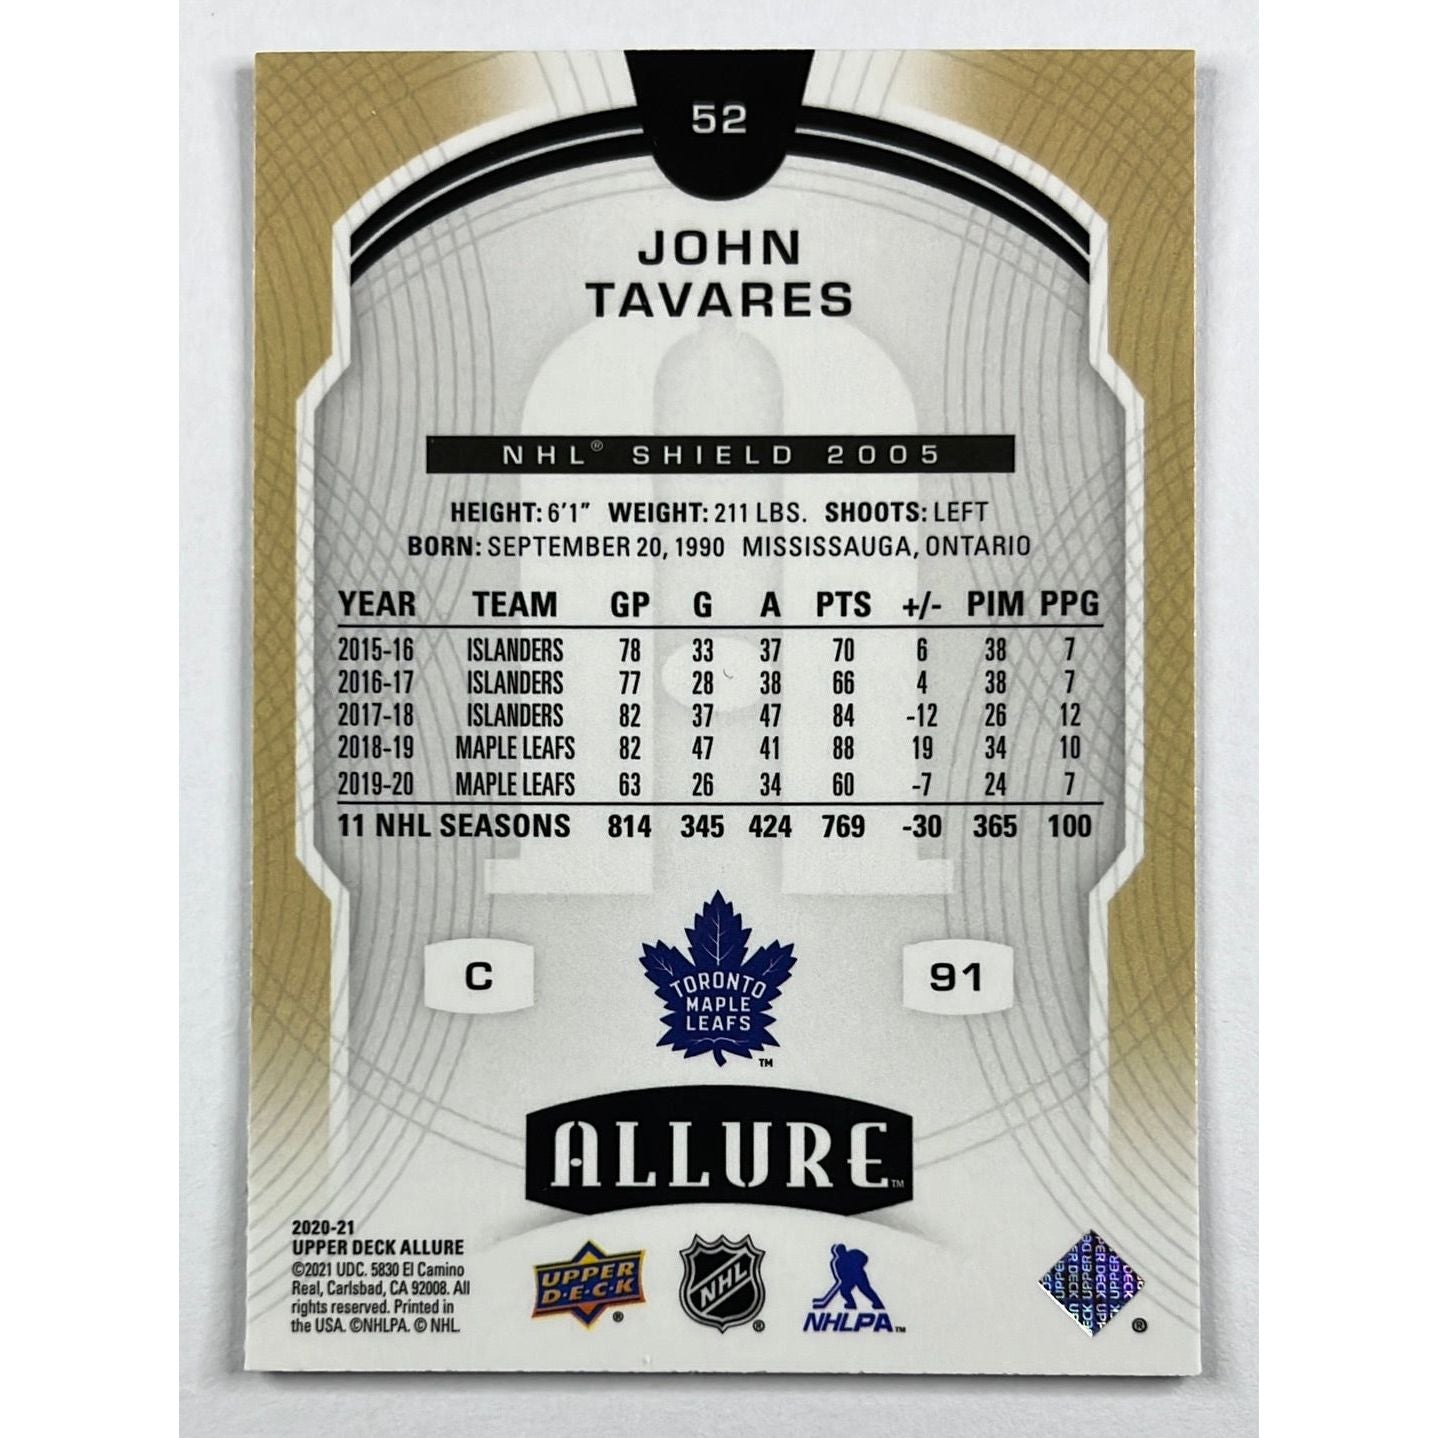 2020-21 Allure John Tavares Shield 2005